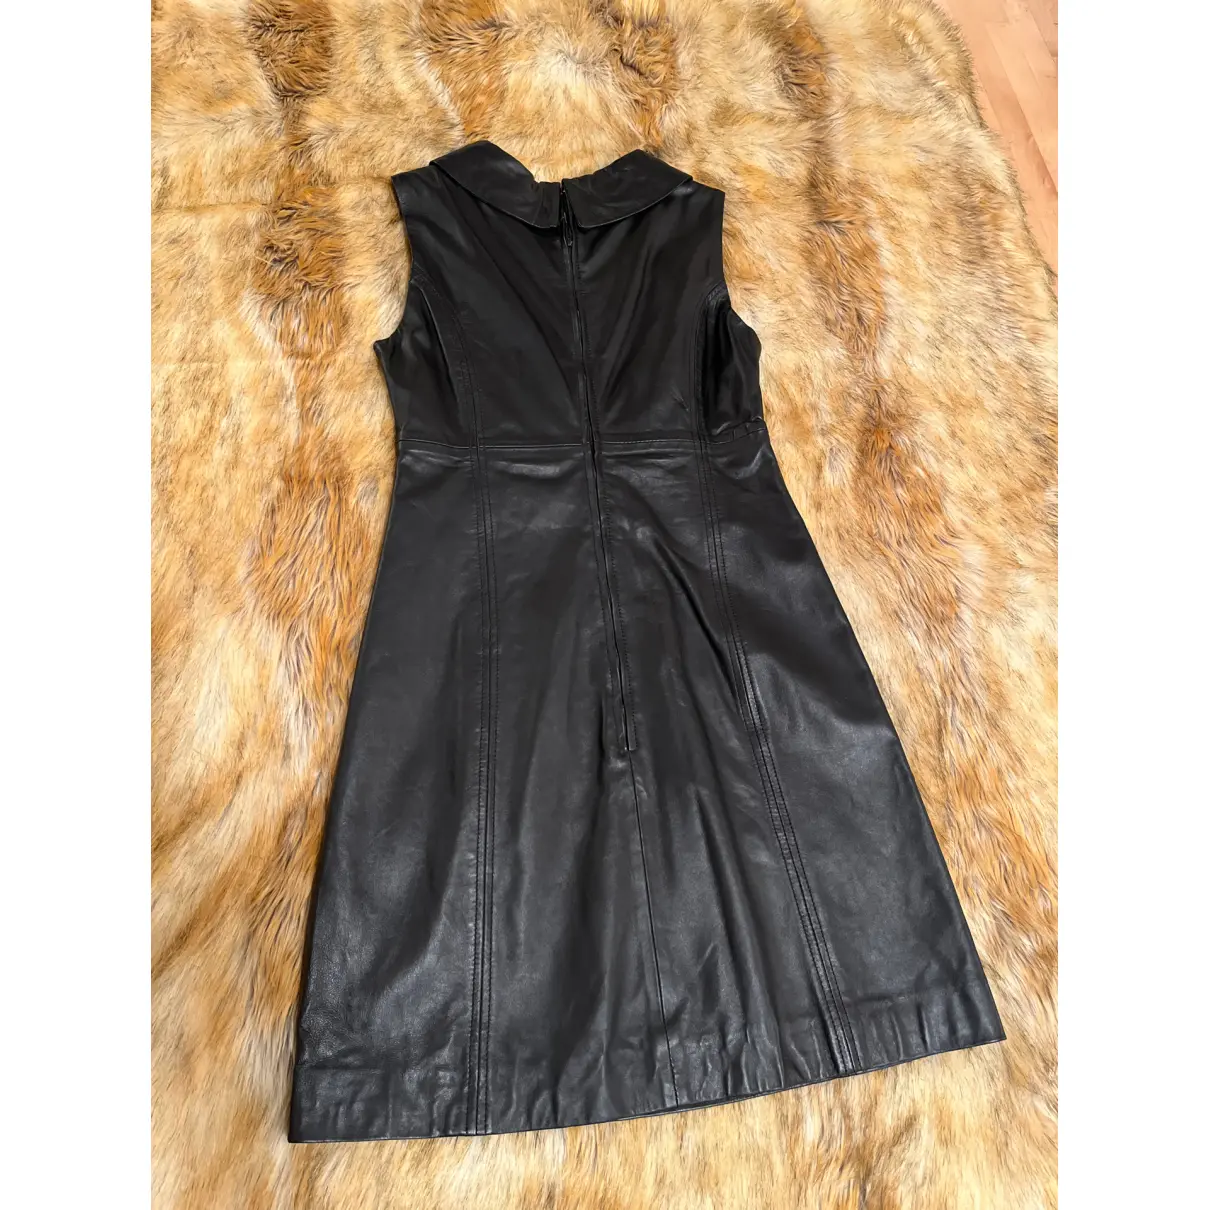 Buy Hallhuber Leather mini dress online